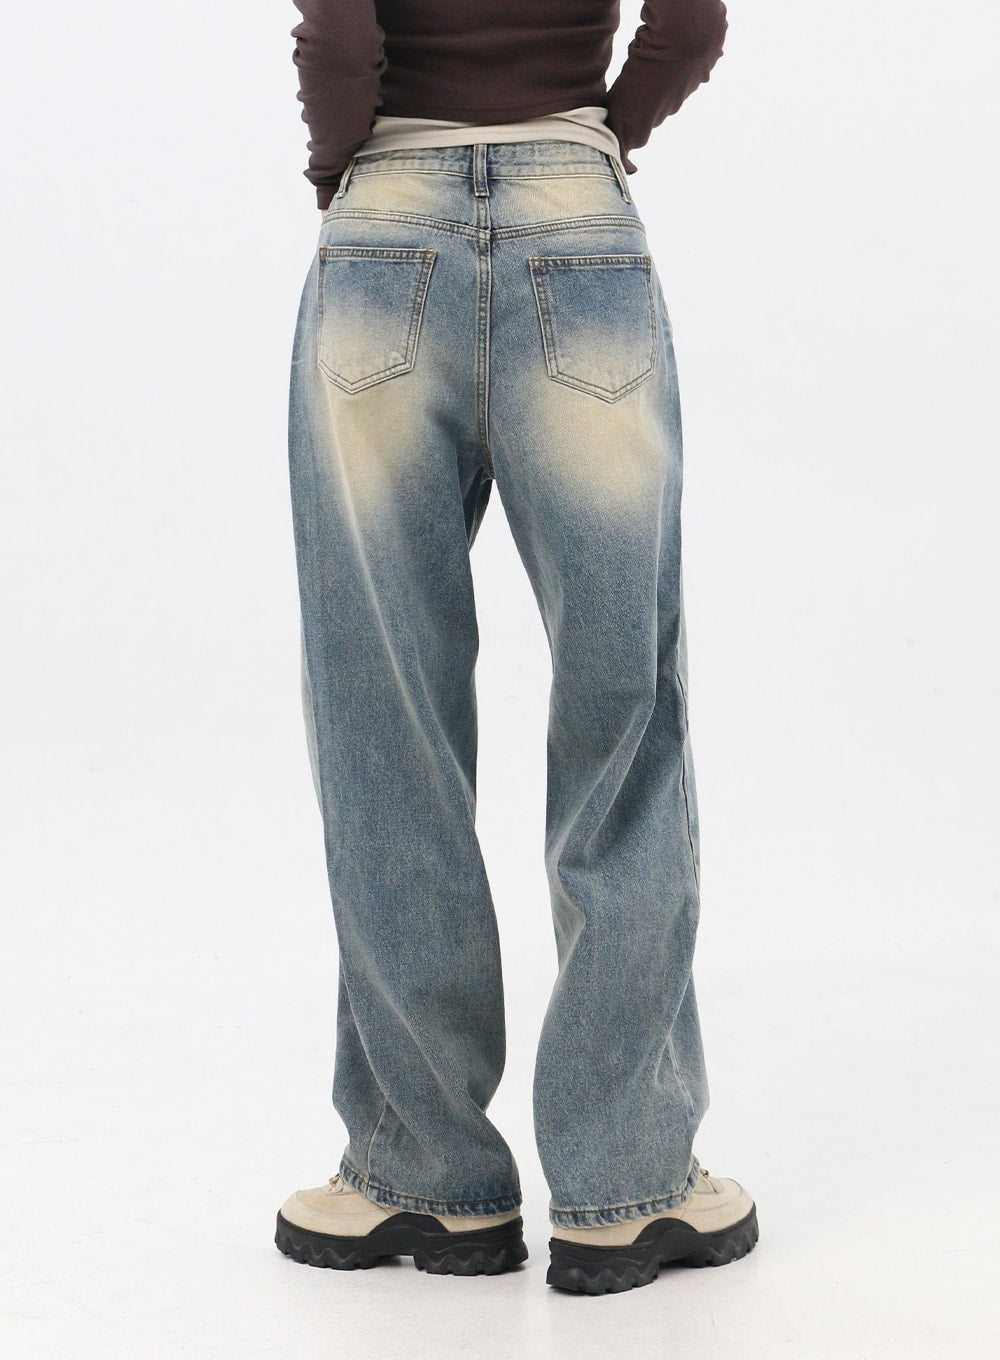 light-washed-denim-wide-leg-jeans-in314